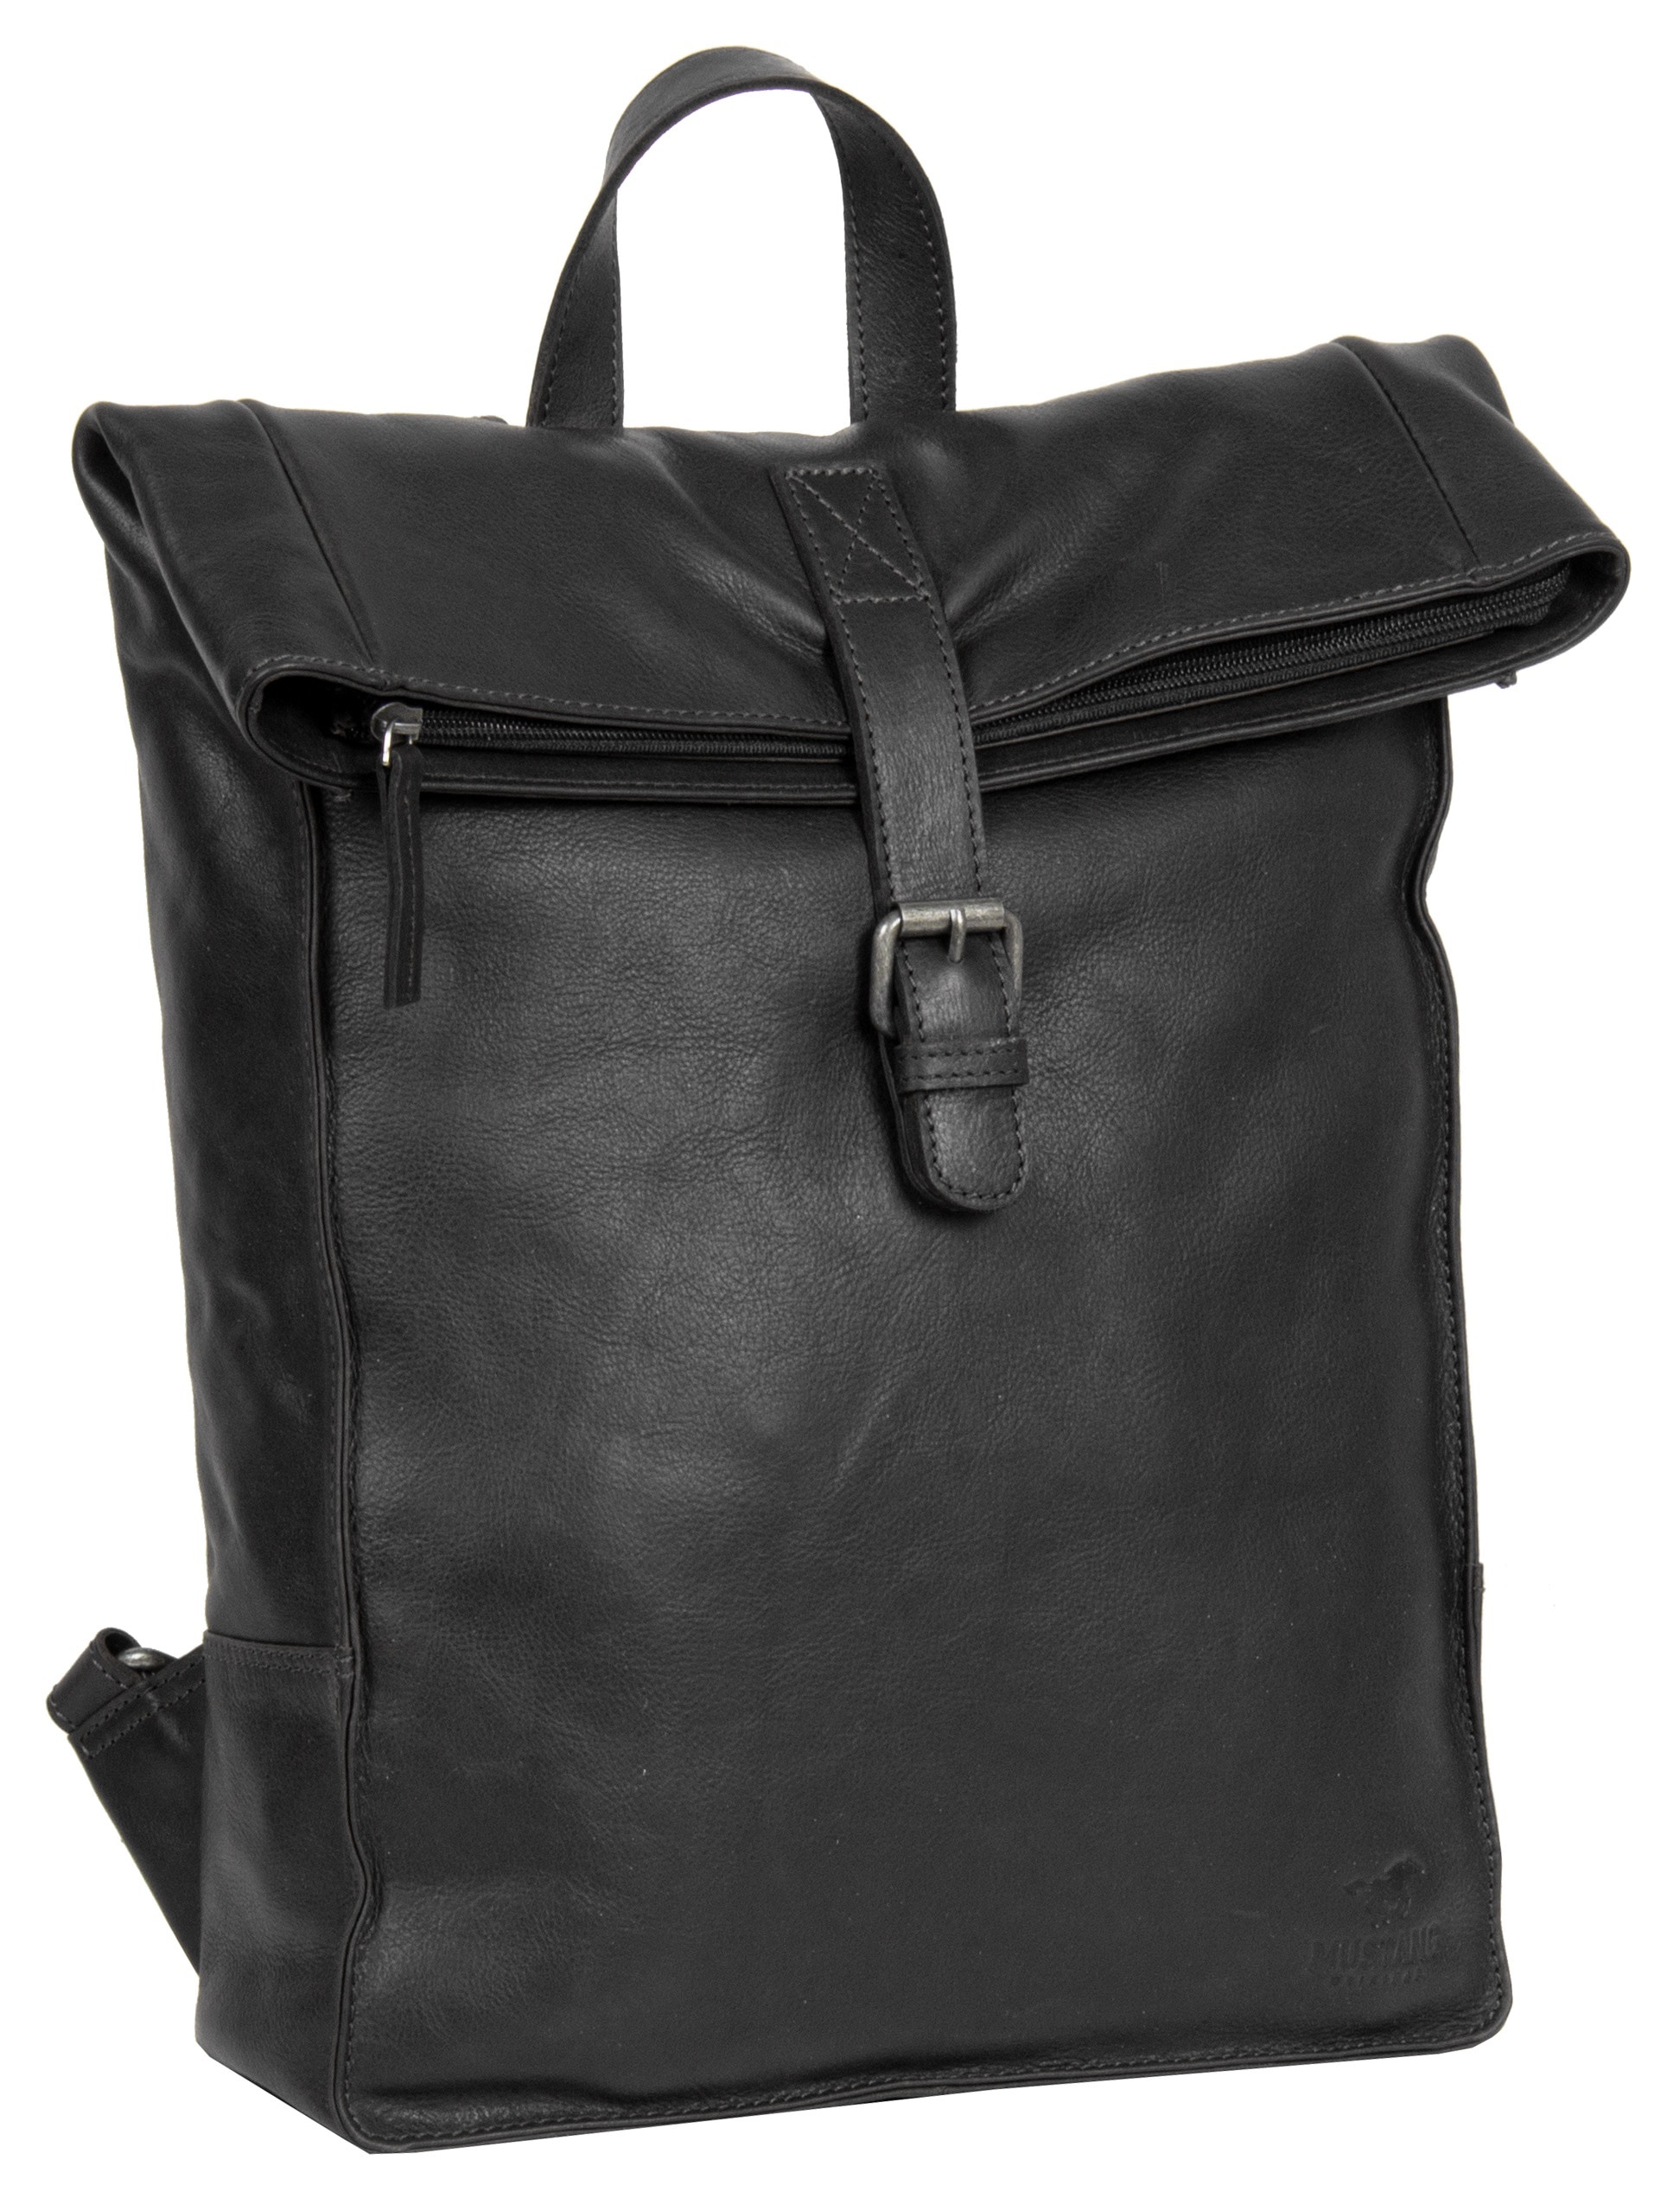 Cityrucksack »Memphis backpack flap«, aus hochwertigem Leder